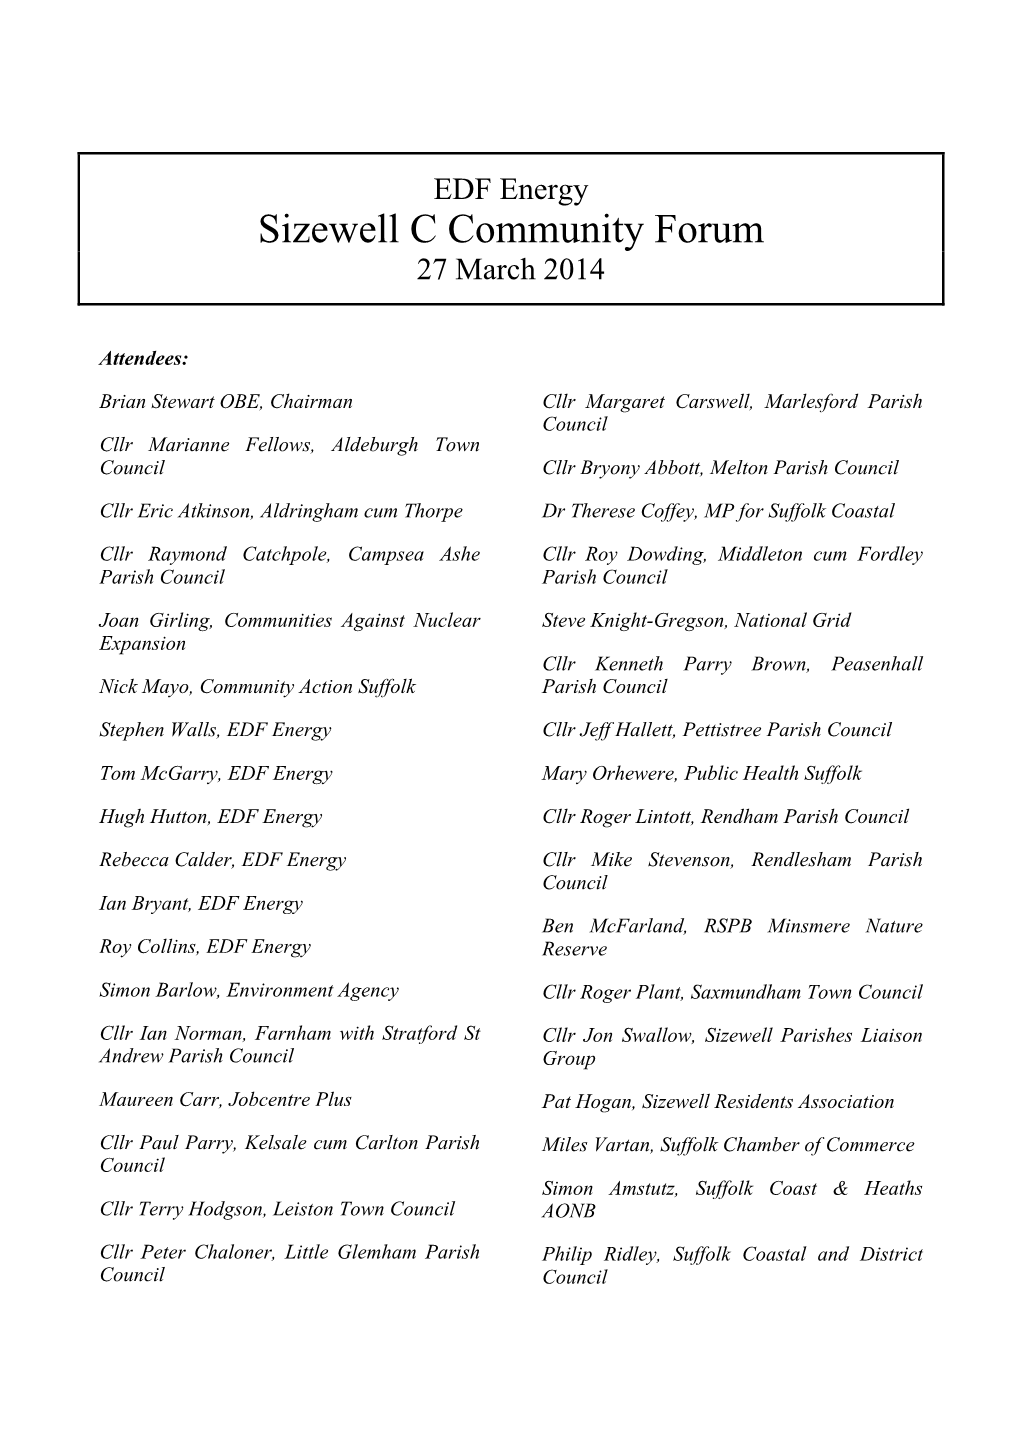 Sizewell C Community Forum 27 March 2014